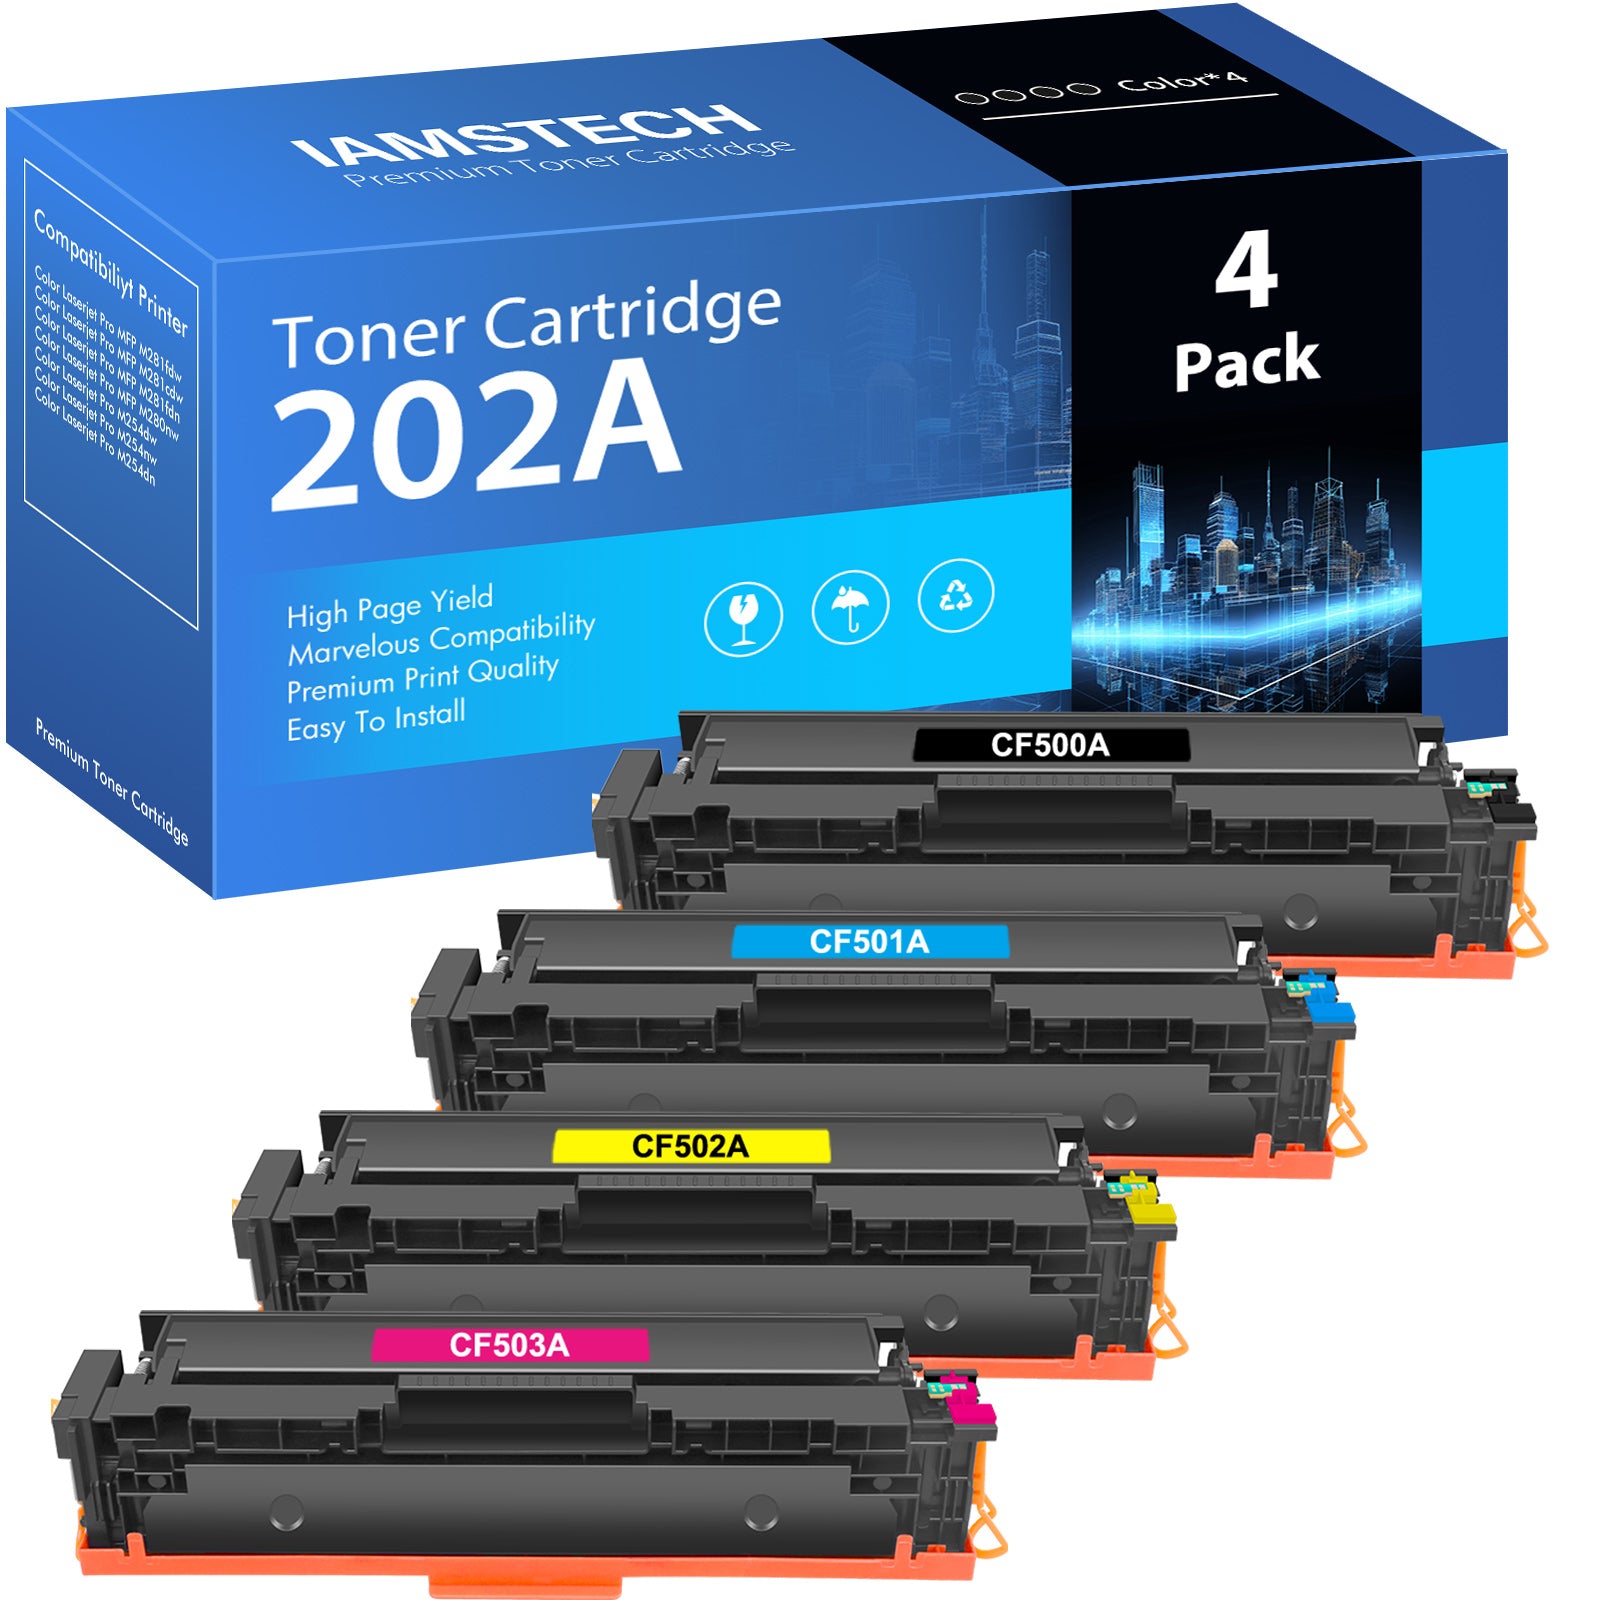 202A 4-Pack Toner Cartridge Replacement for HP 202A 202X CF500A CF501A CF502A CF503A Color Laserjet Pro MFP M281fdw M281cdw M254dw 281fdw M254 M281 Printer (Black Cyan Yellow Magenta)